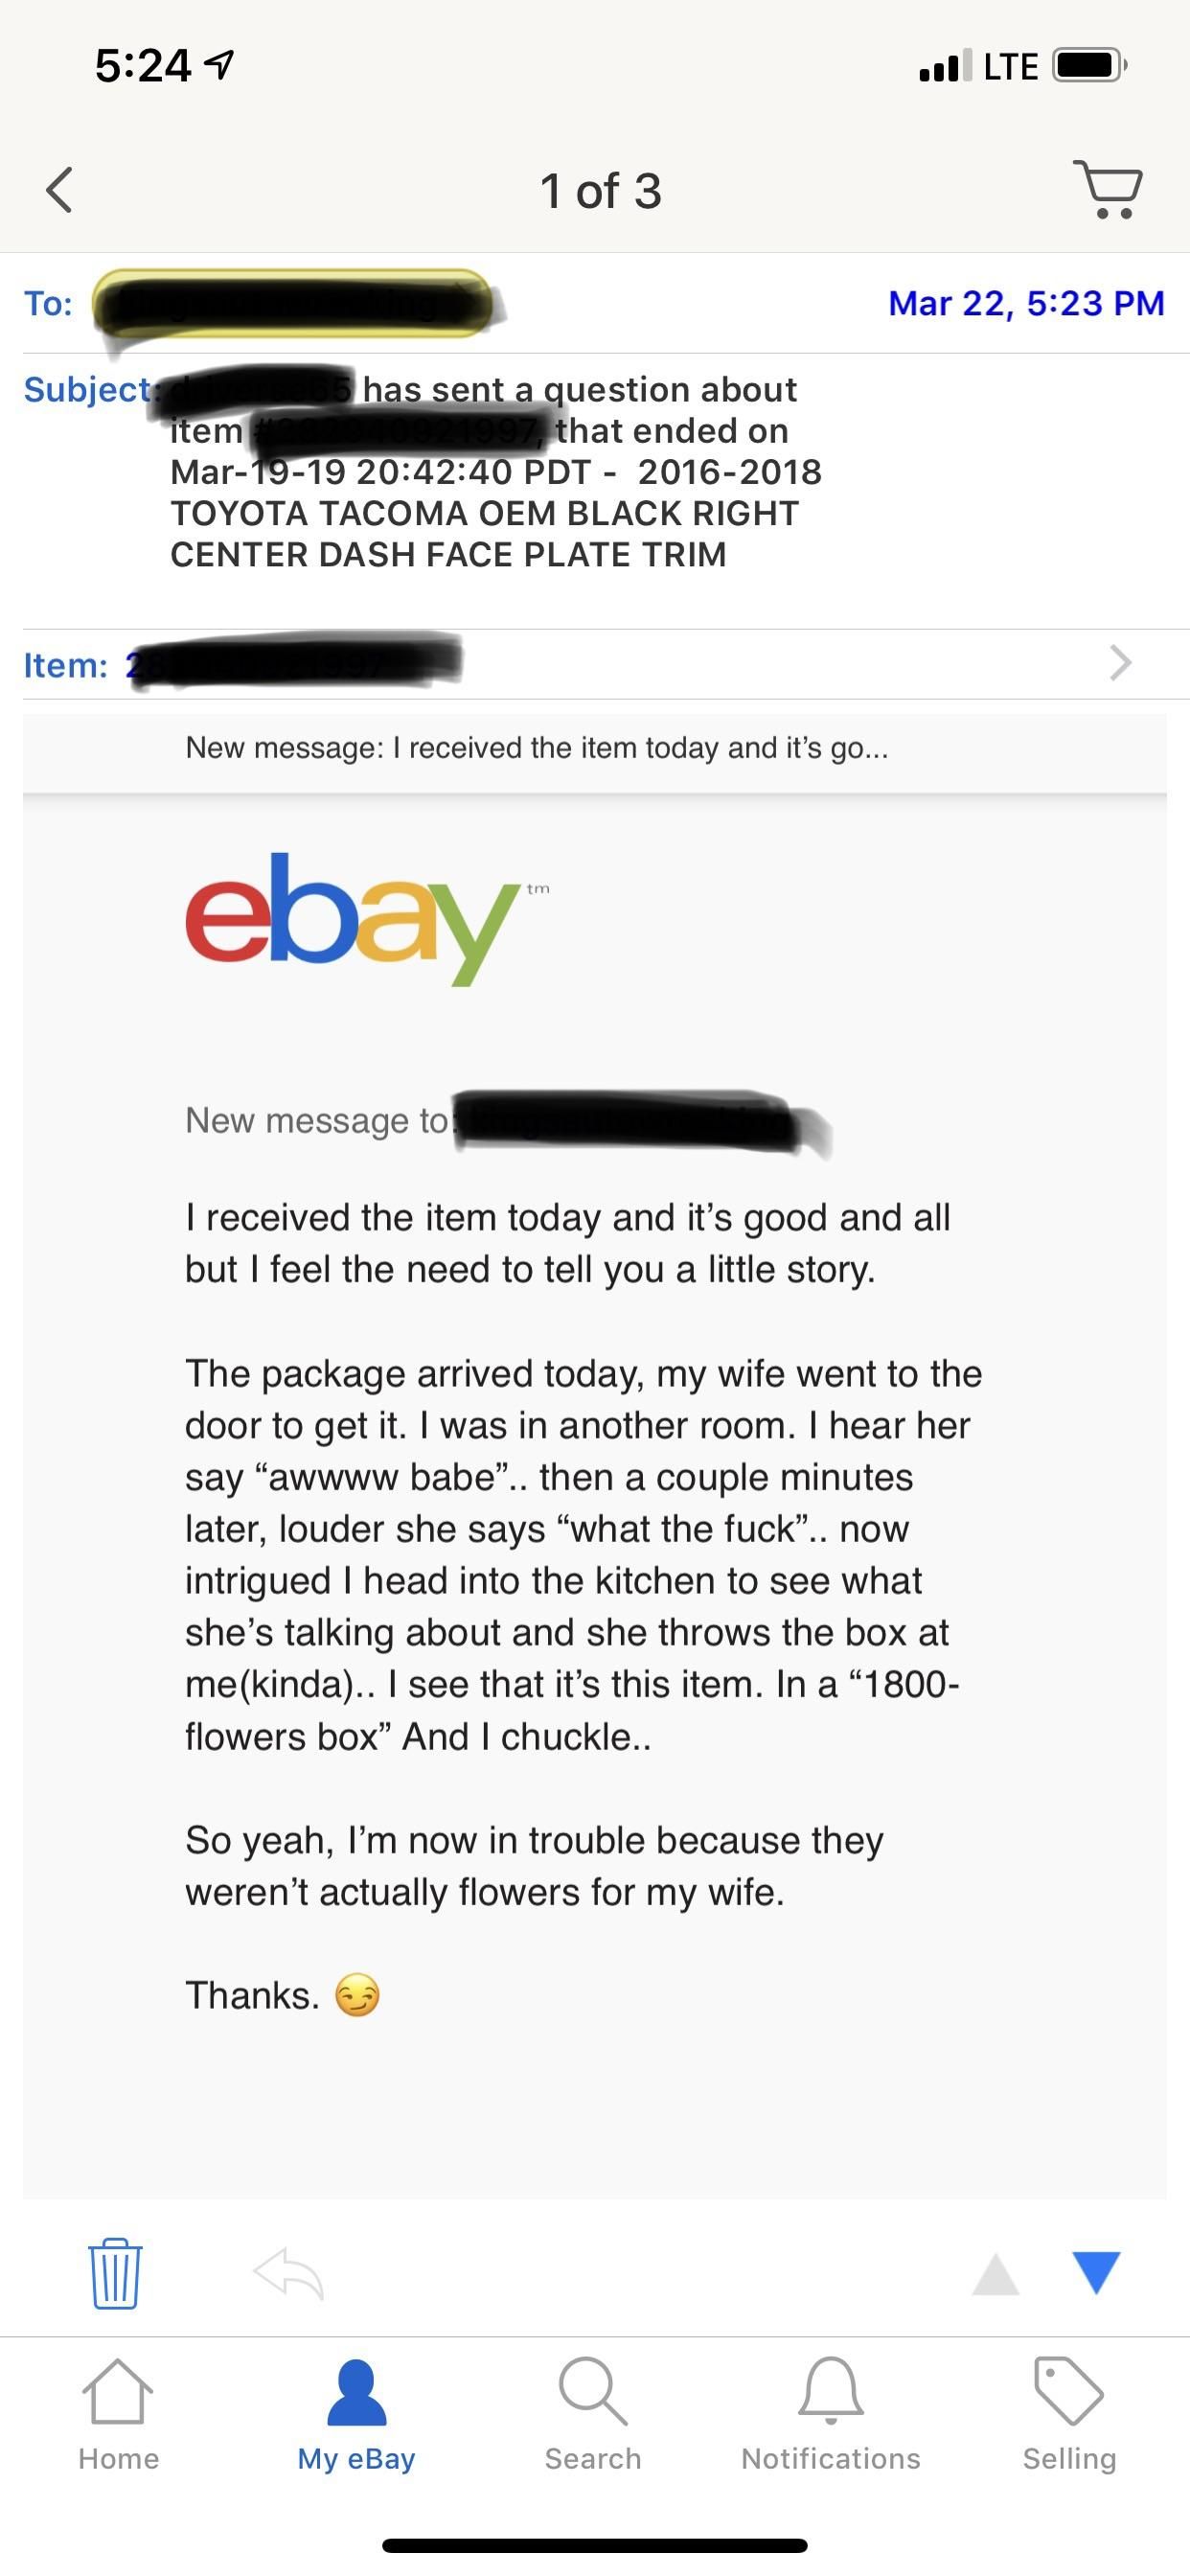 My story about an eBay item.